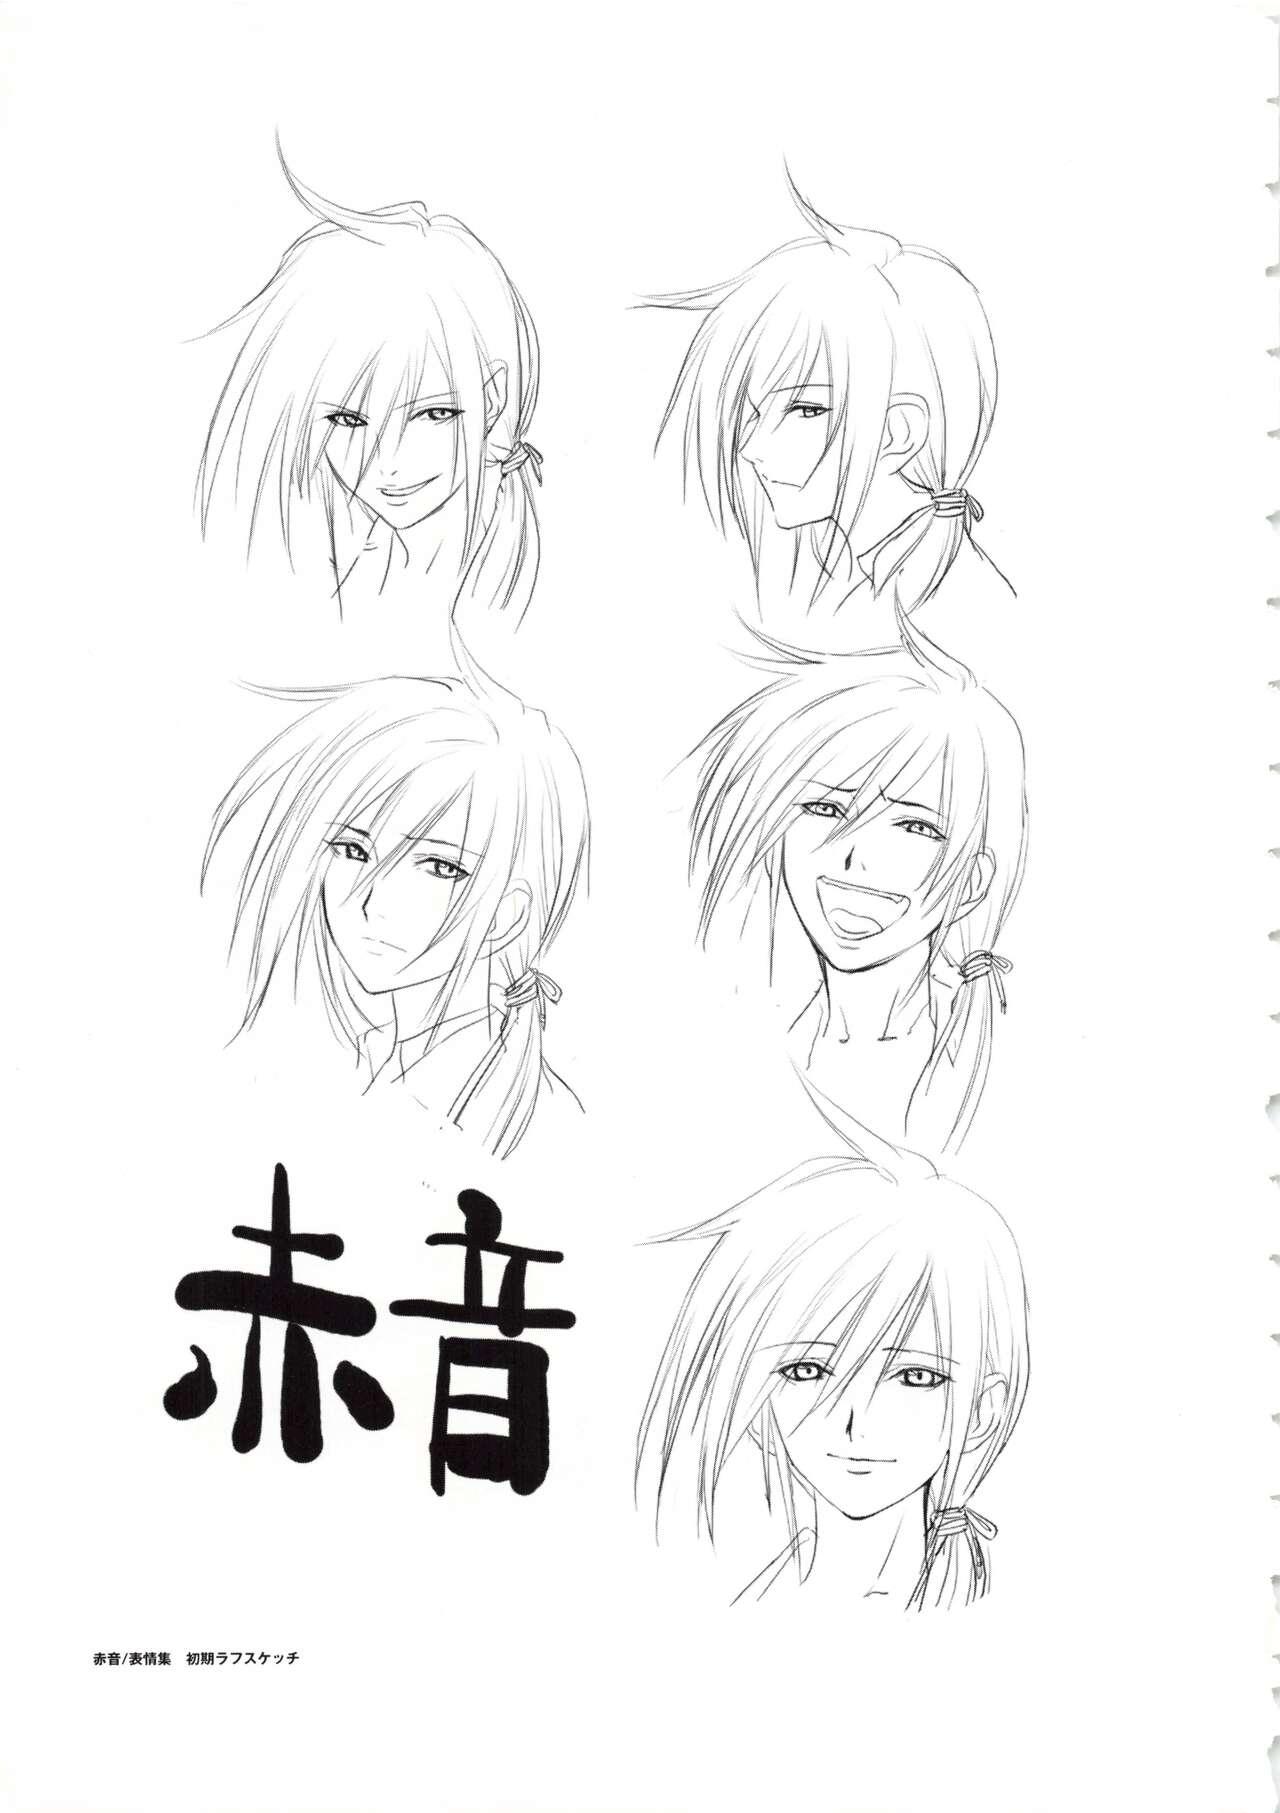 Hanachirasu - Initial Sketches and Unprocessed Illustrations - Selection 7